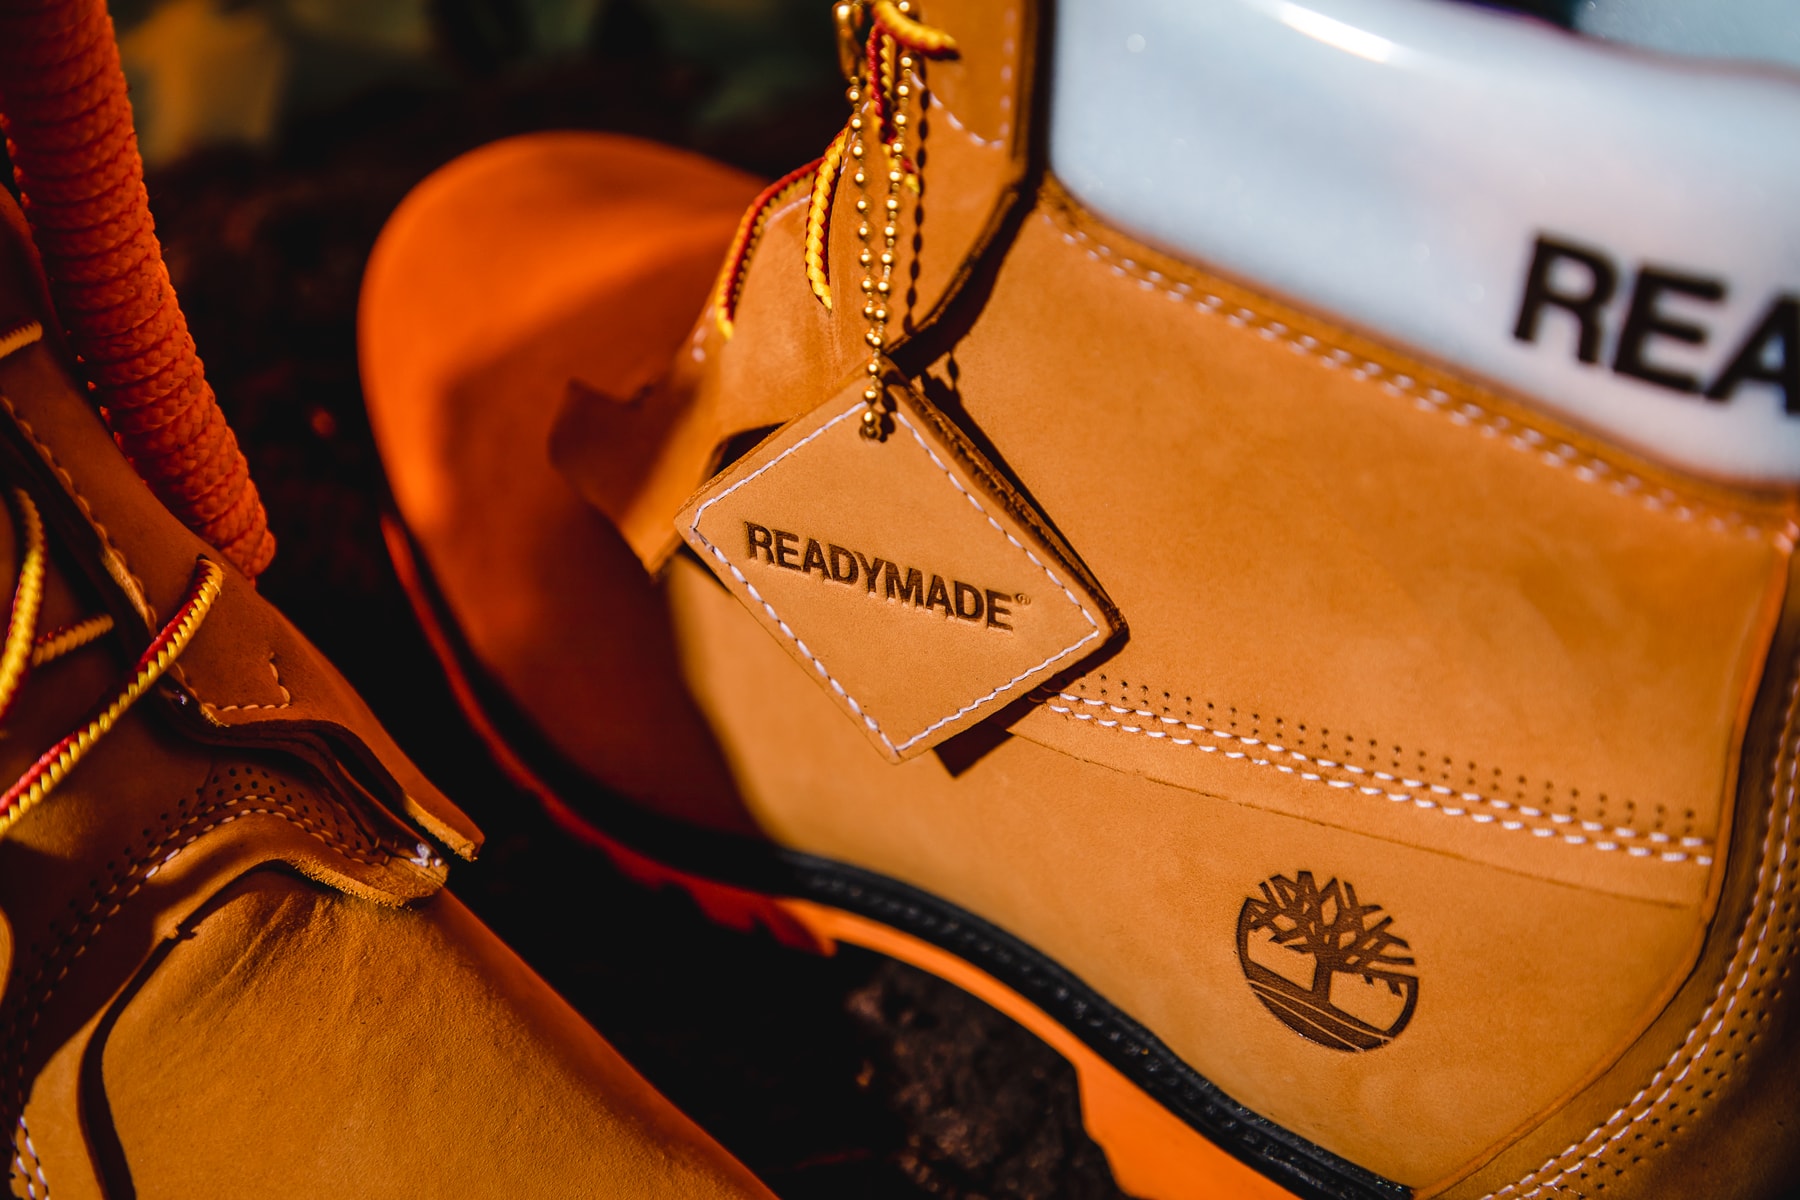 readymade timberland 6-inch boot closer look first release information details shoe footwear yuta Hosokawa buy cop purchase